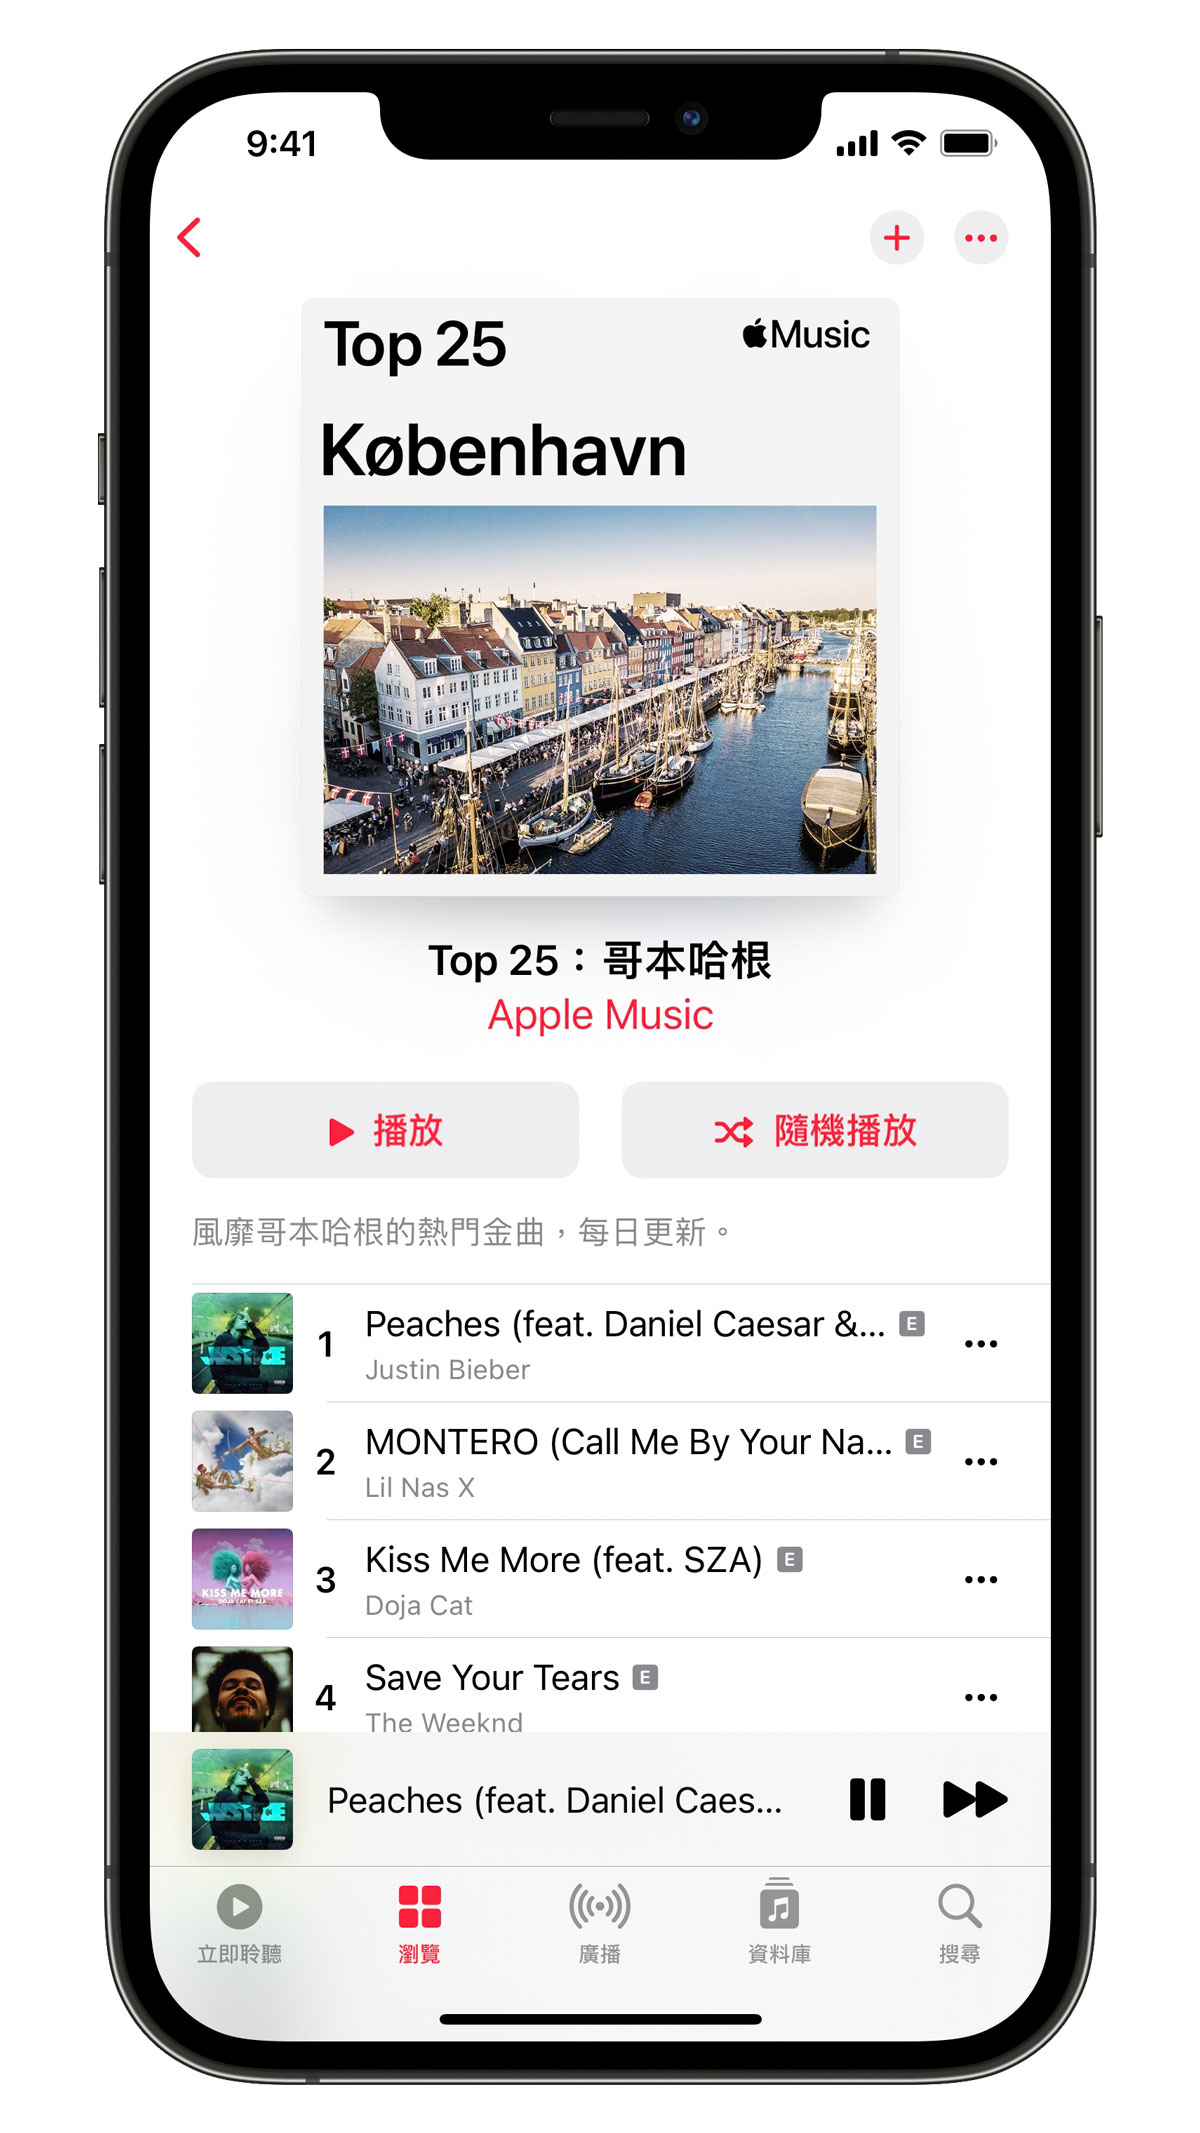 Apple Music 昨日（4 月 27 日）更新，新增了「城市排行榜」（City Charts）項目，以排行榜的形式列出全球百多個城市最受歡迎的 25 首作品，每日更新。是幾有趣的，雖然我猜超過 95% 的香港樂迷根本不會關心米蘭或聖彼得堡的人究竟最近愛聽甚麼歌，但其實構思上是很 Apple Music 的——從來沒打算討好大眾，都把你視作宅宅的音樂研究生。